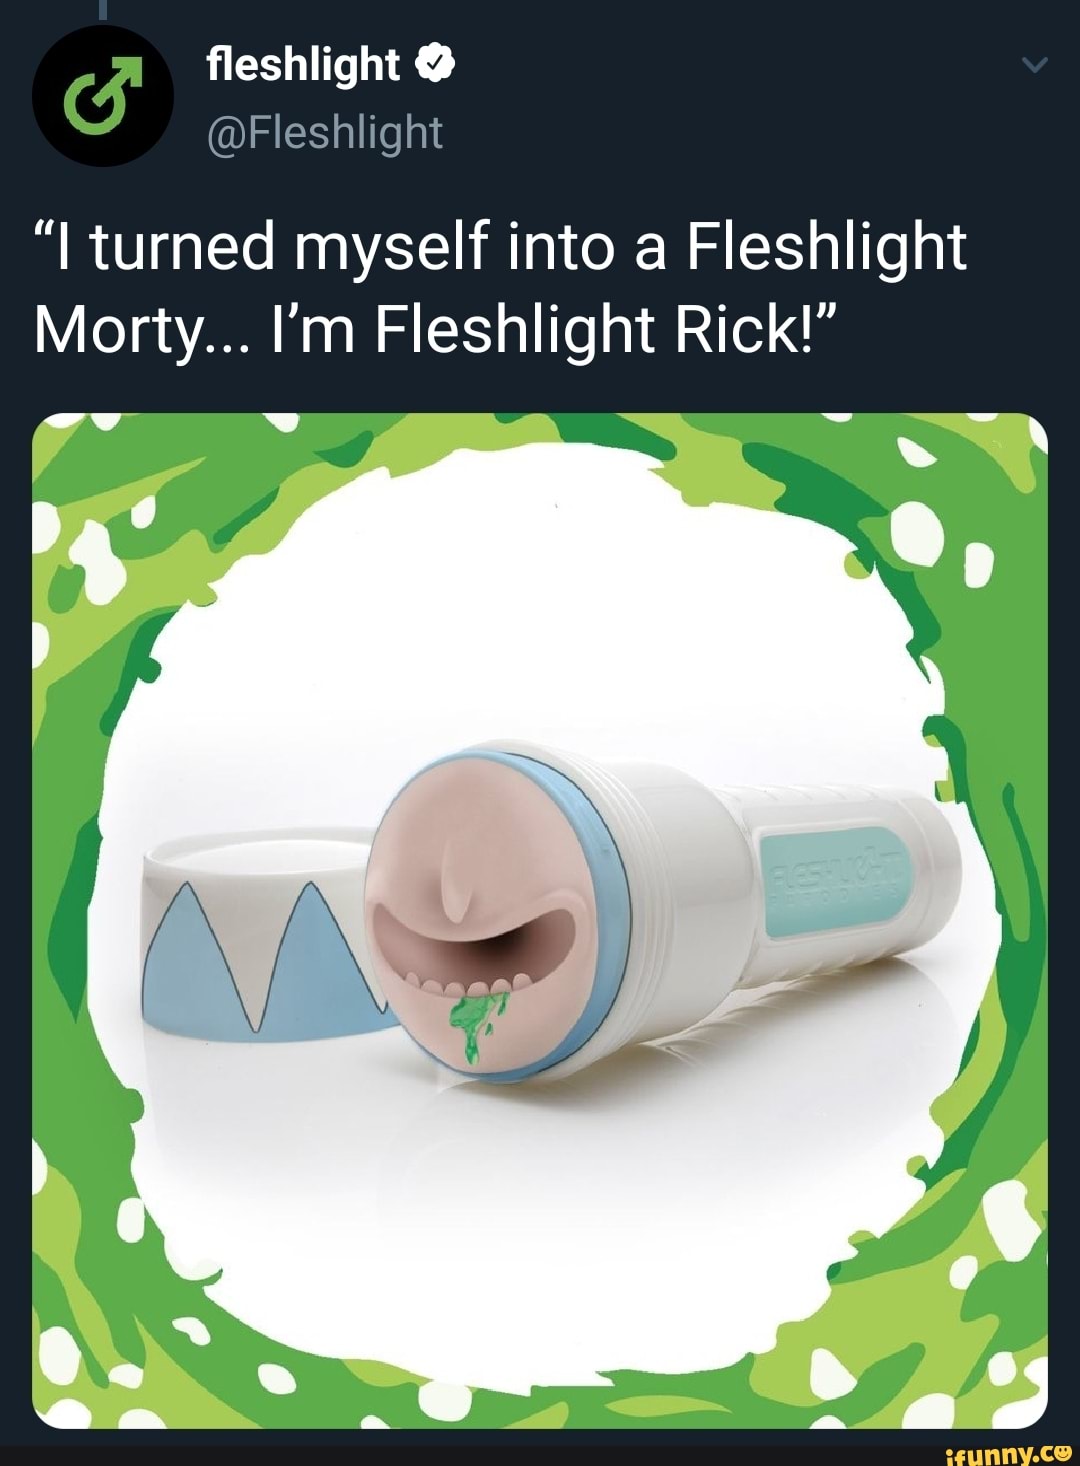 I’m Told I’m Better As A Fleshlight